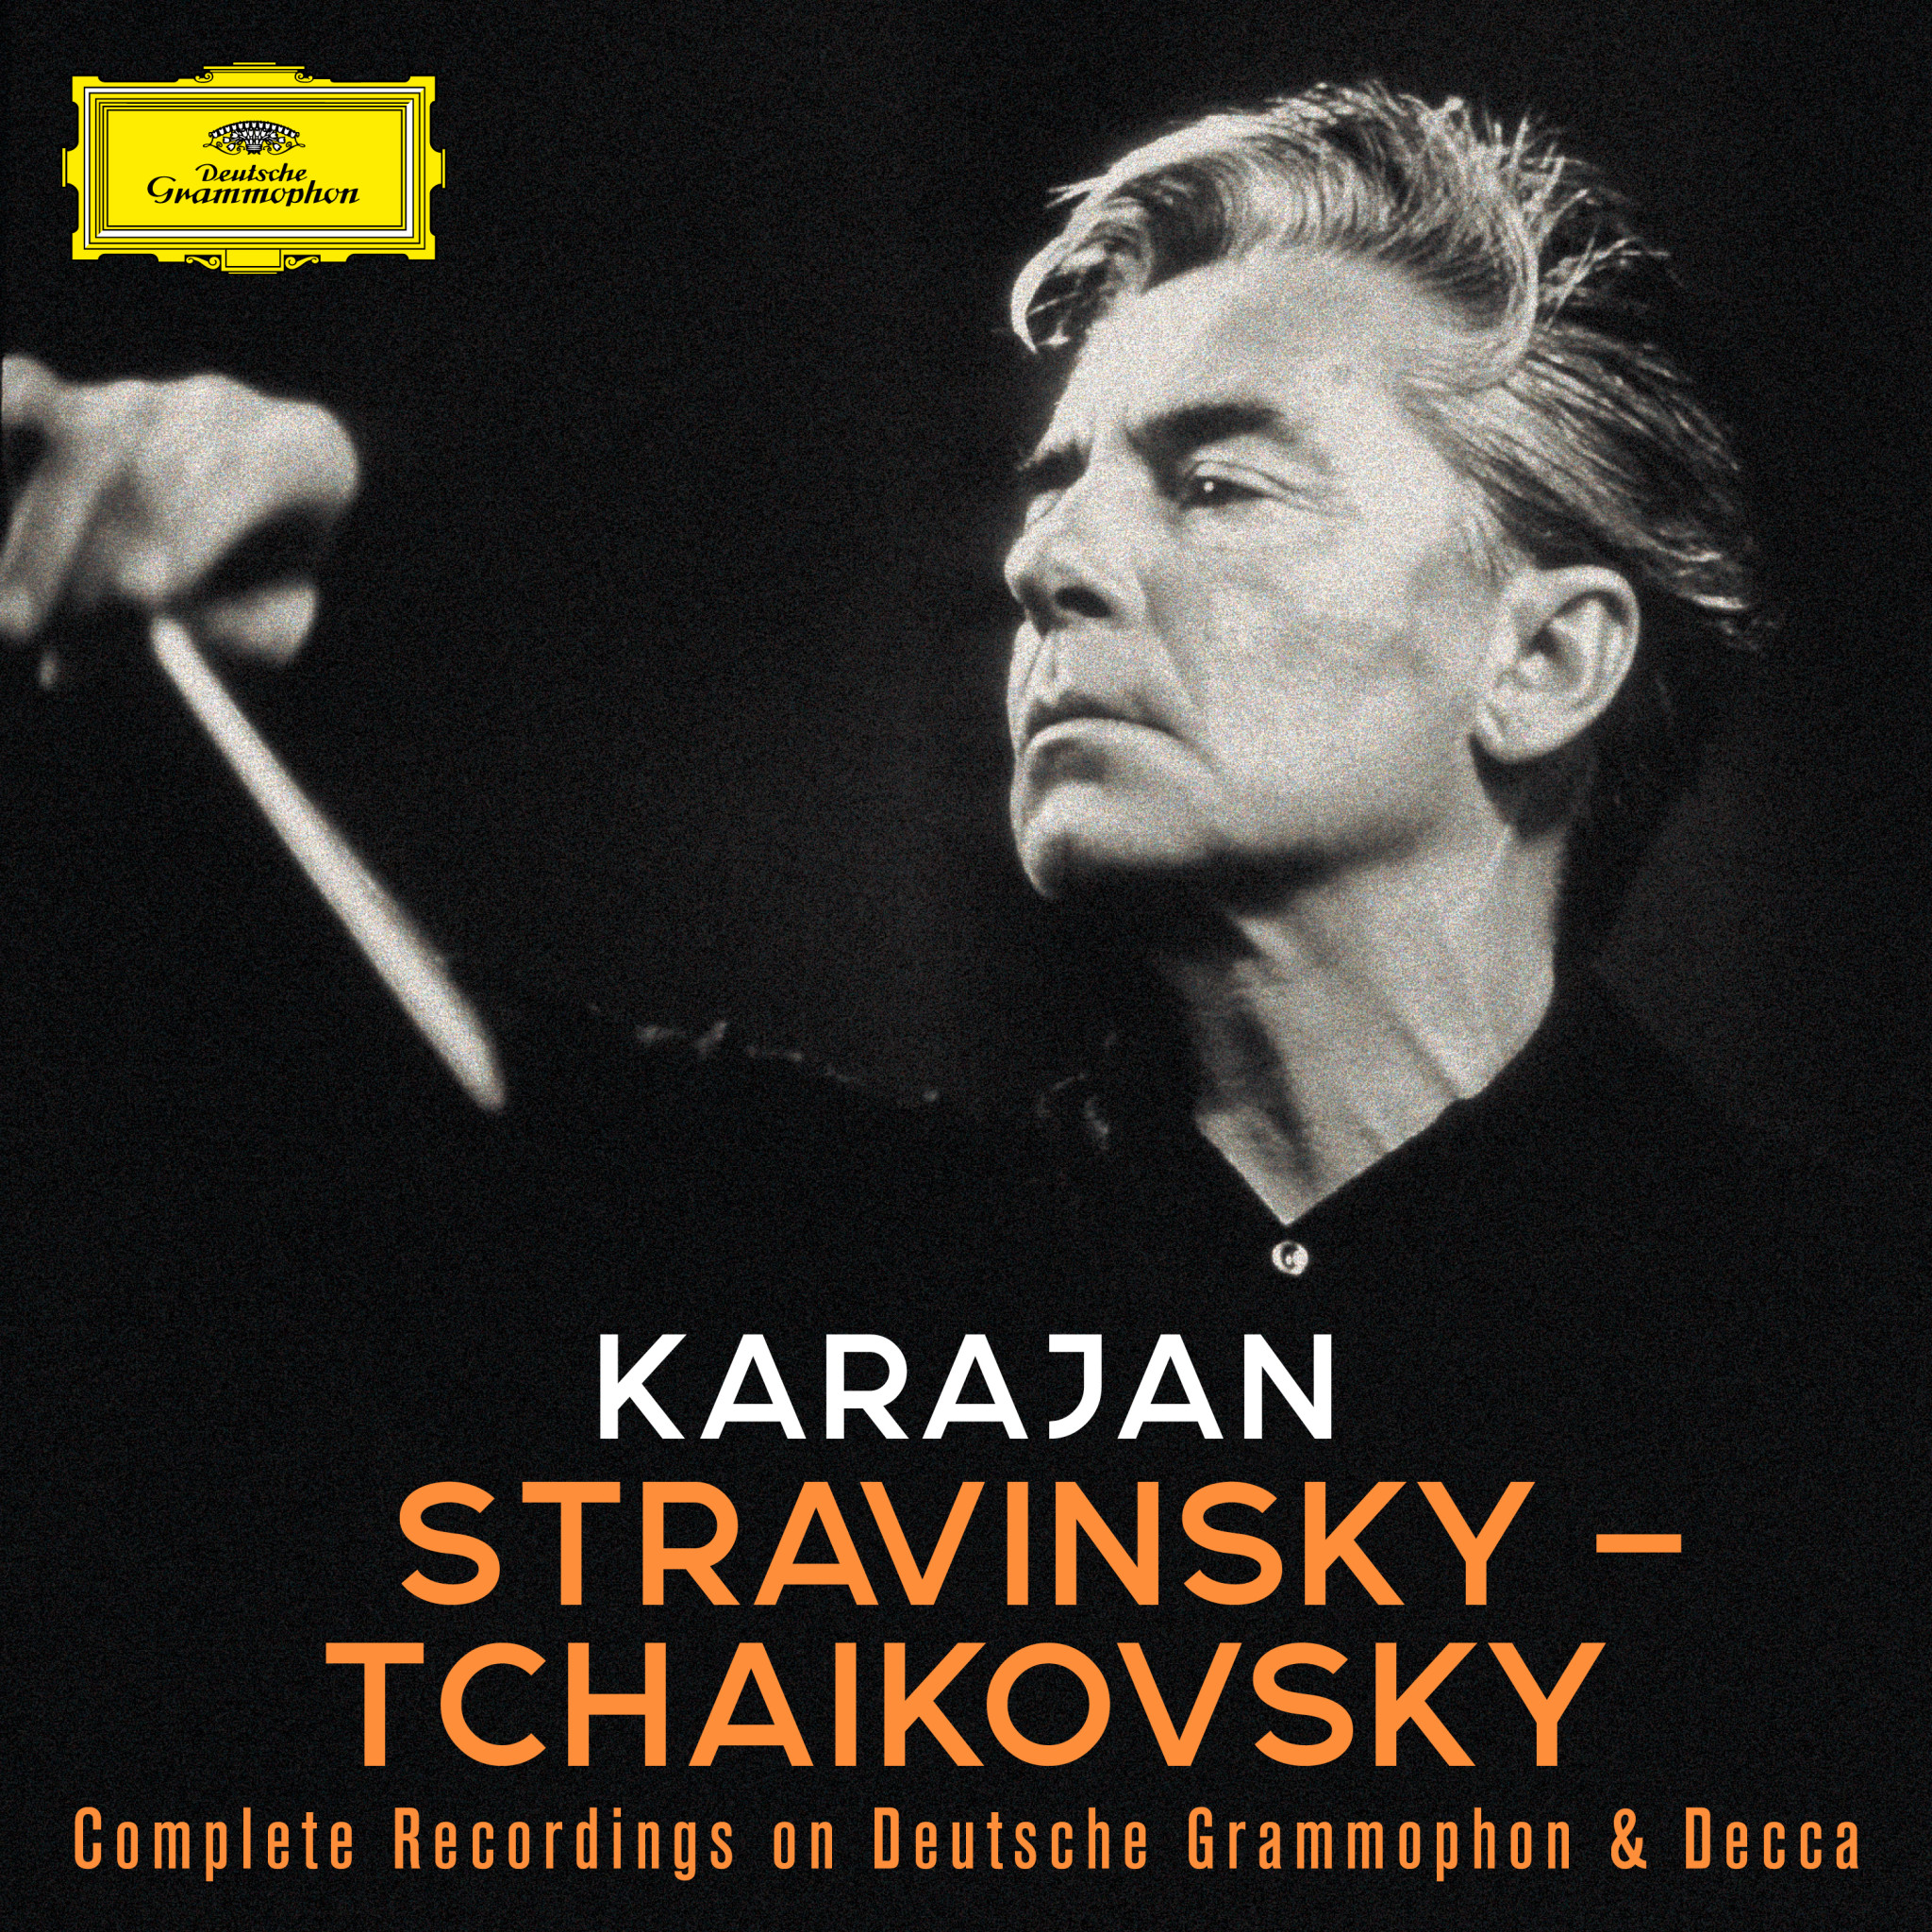 Karajan - Stravinsky - Tchaikovsy